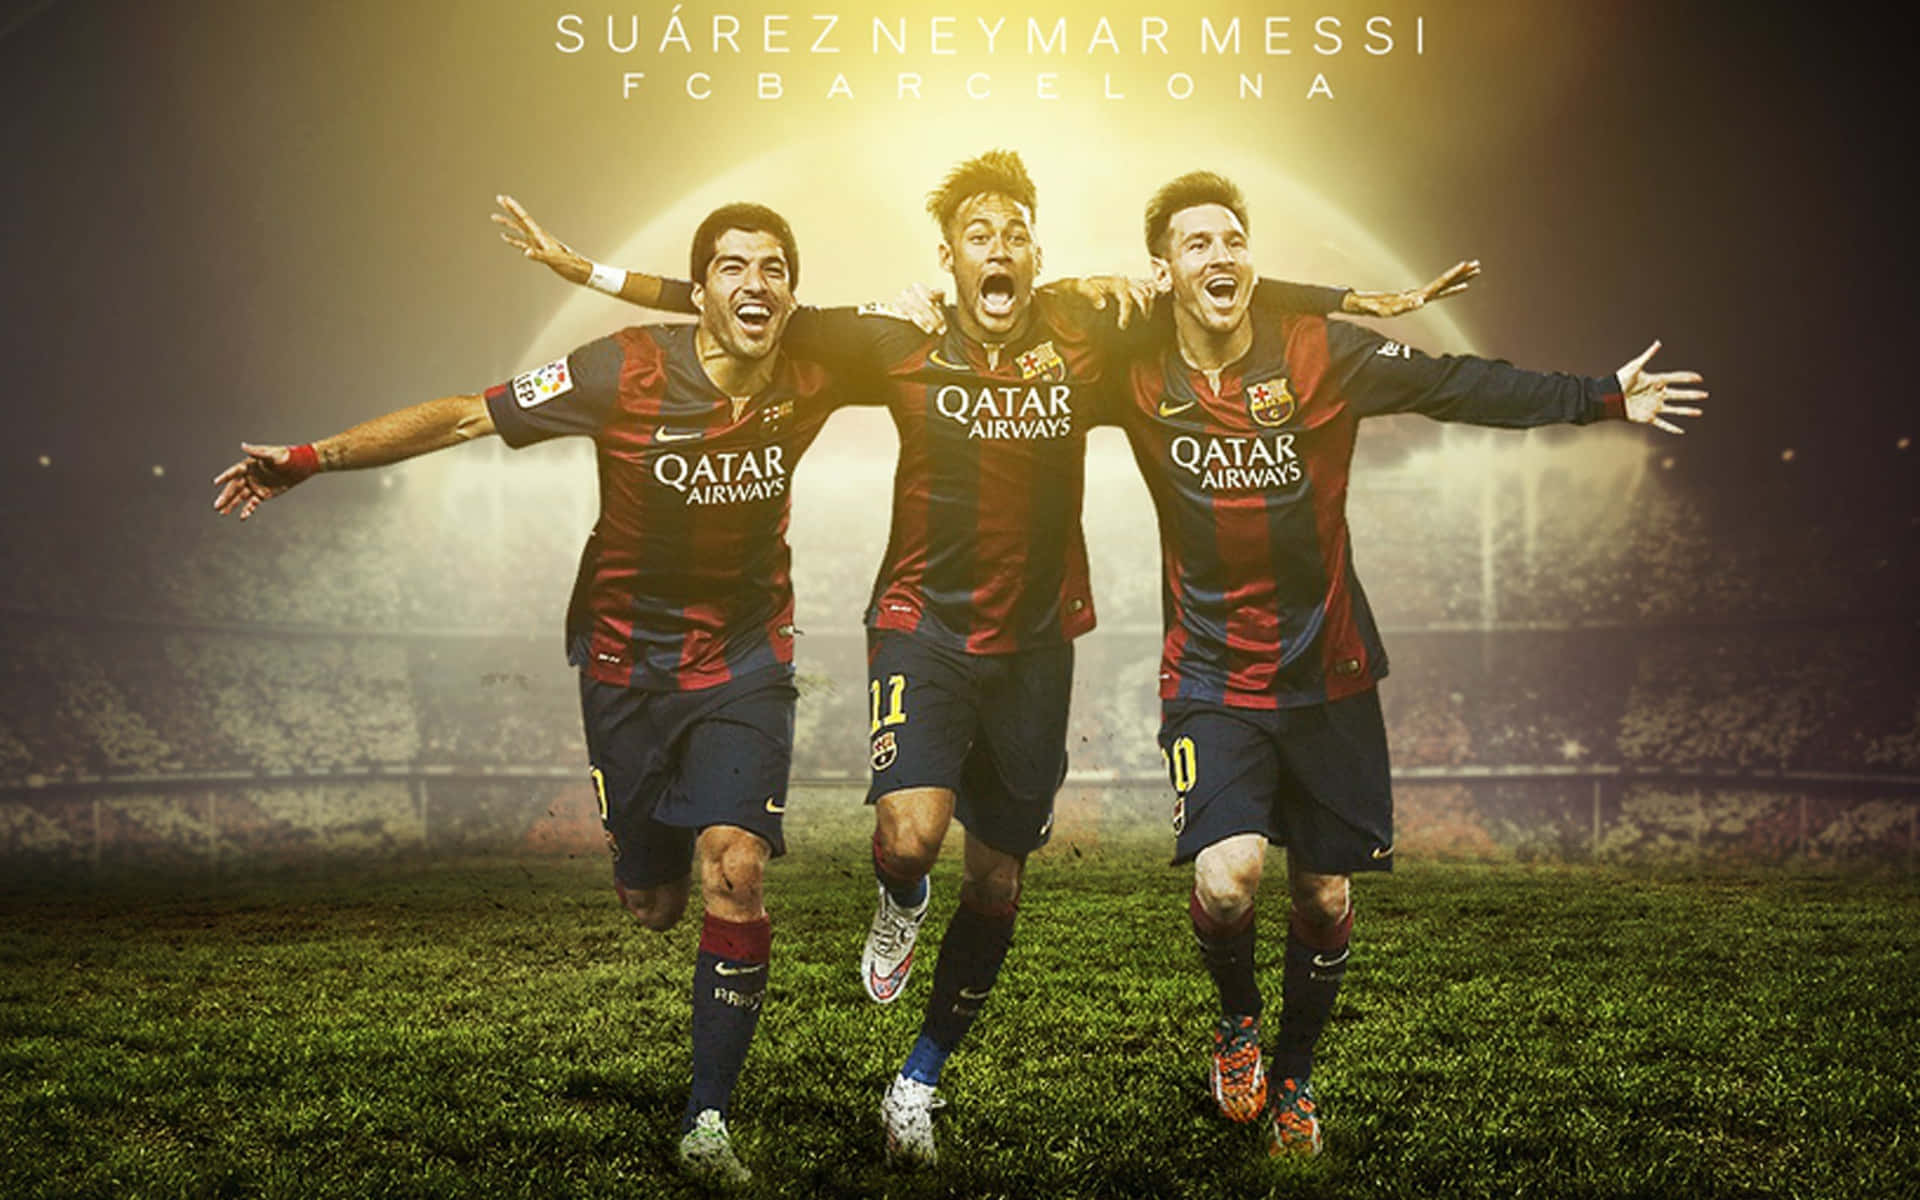 Soccer stars Messi and Neymar team up. Wallpaper